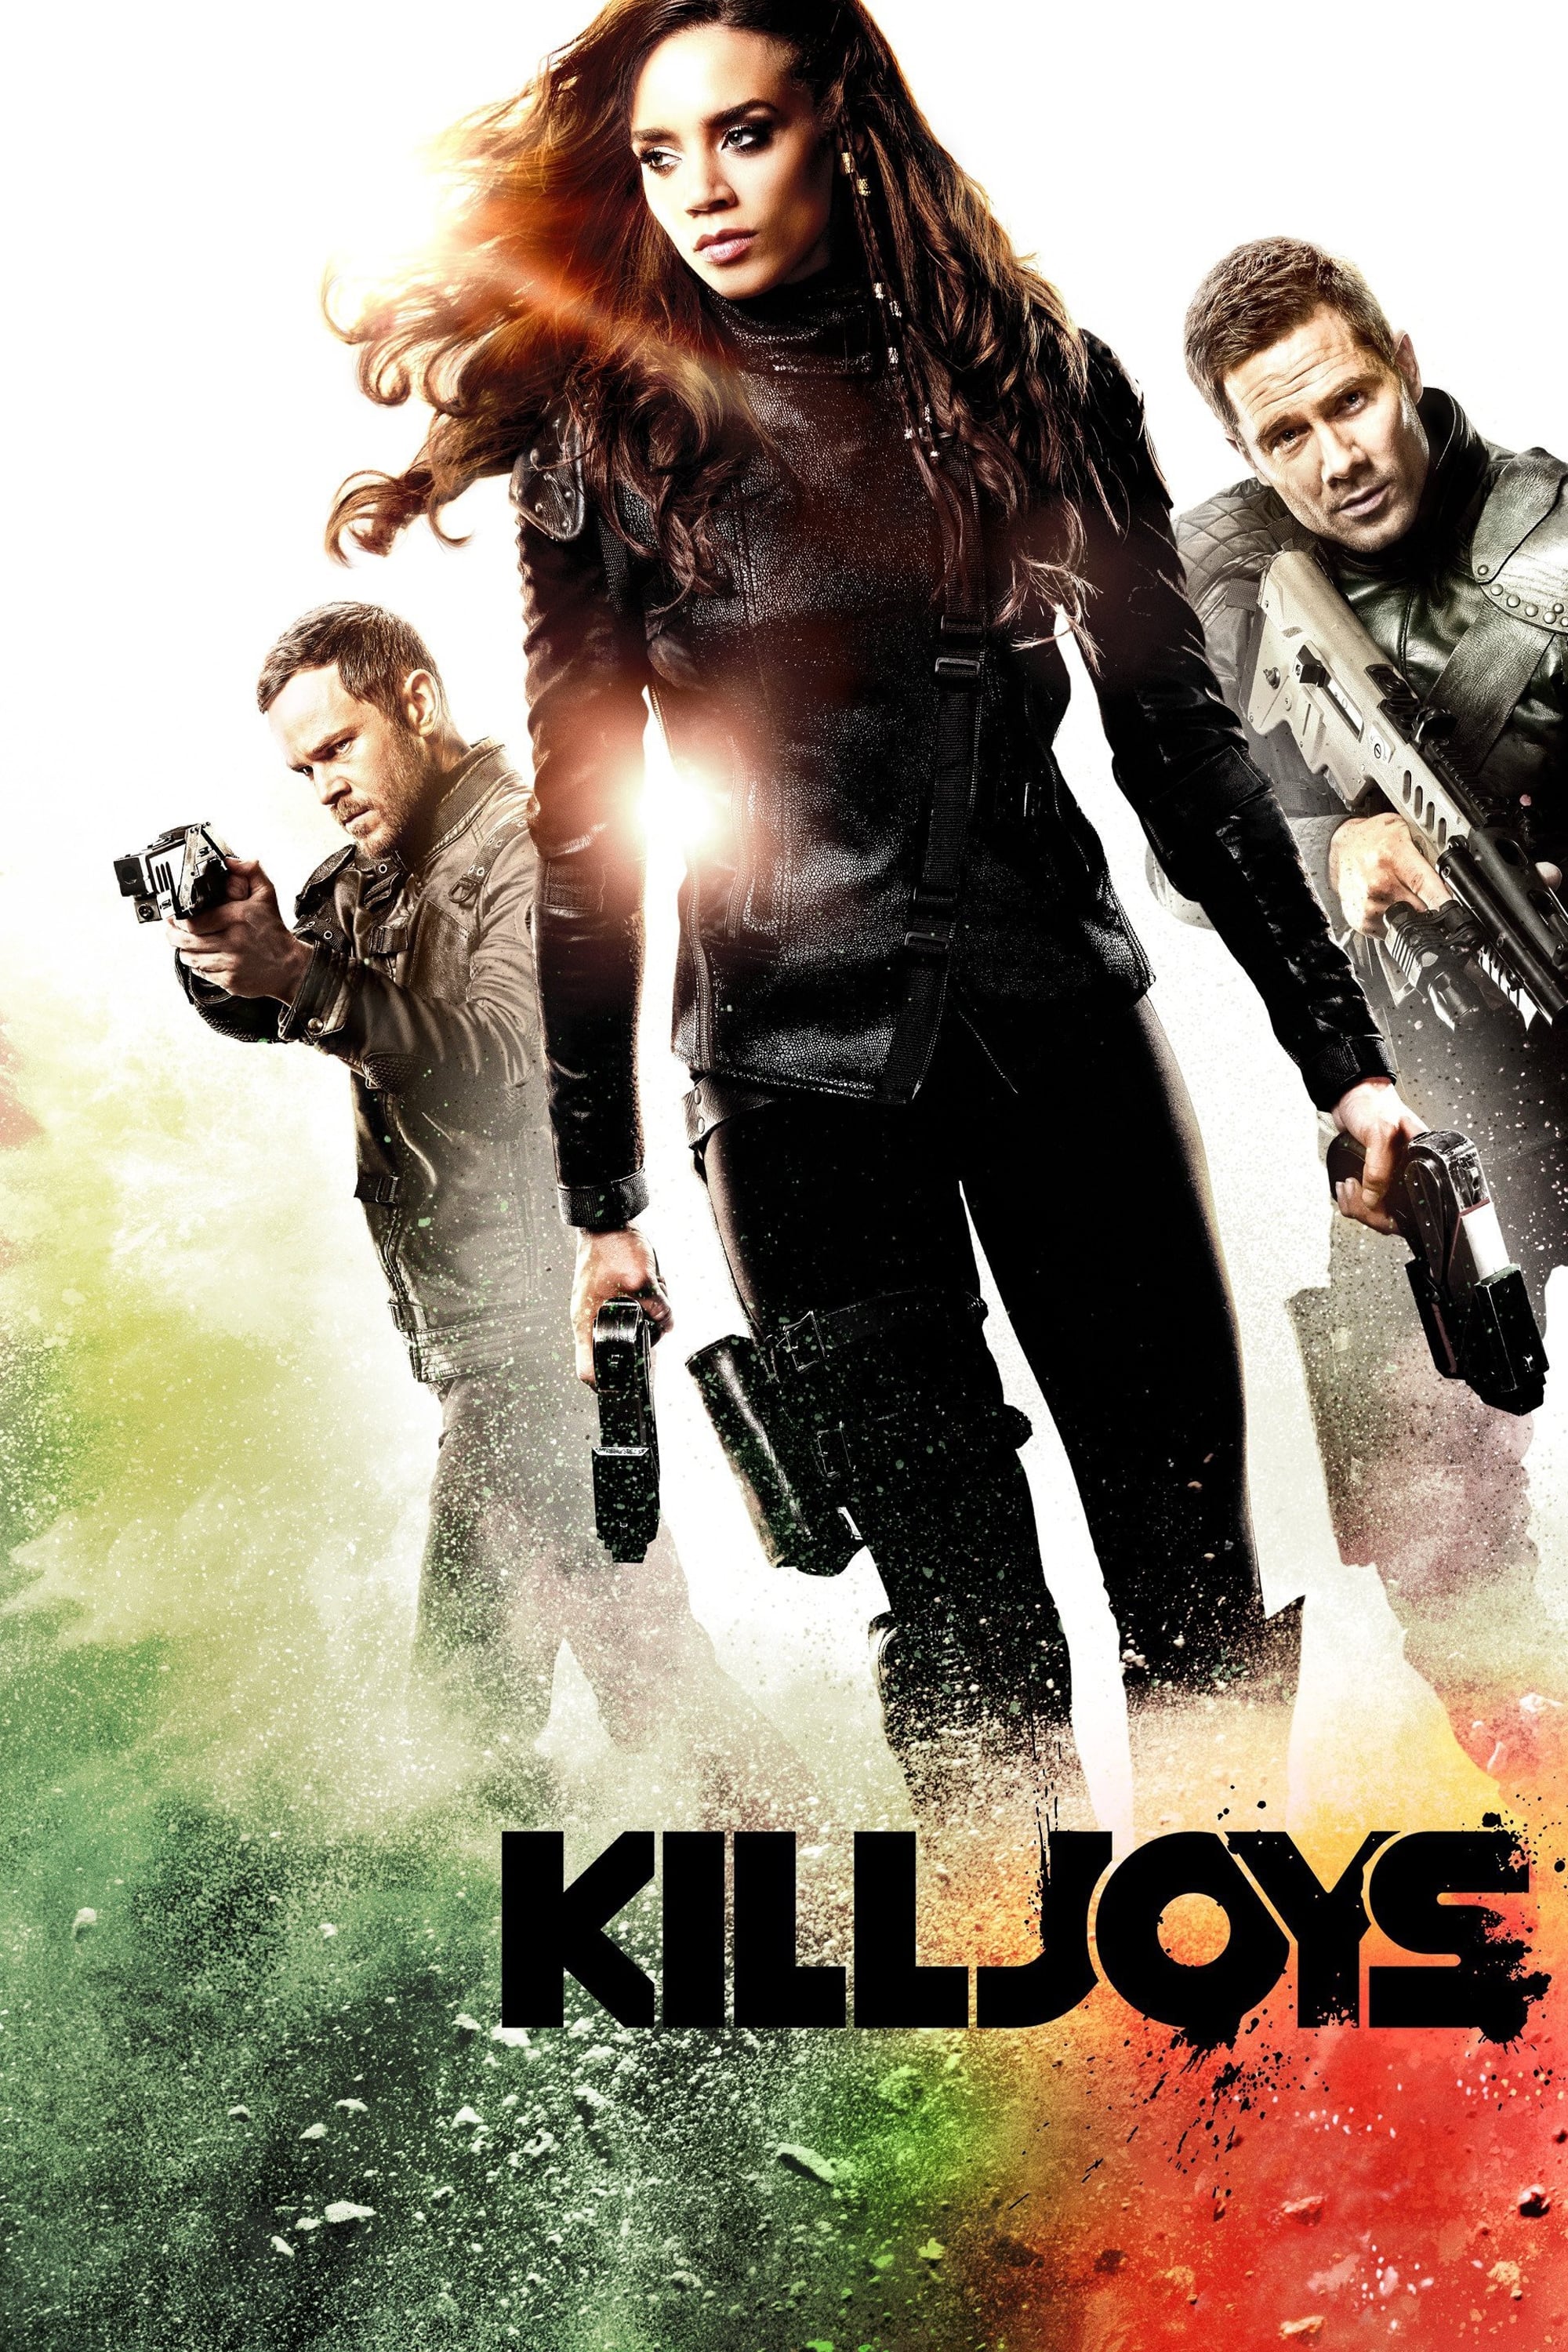 Killjoys (2015)